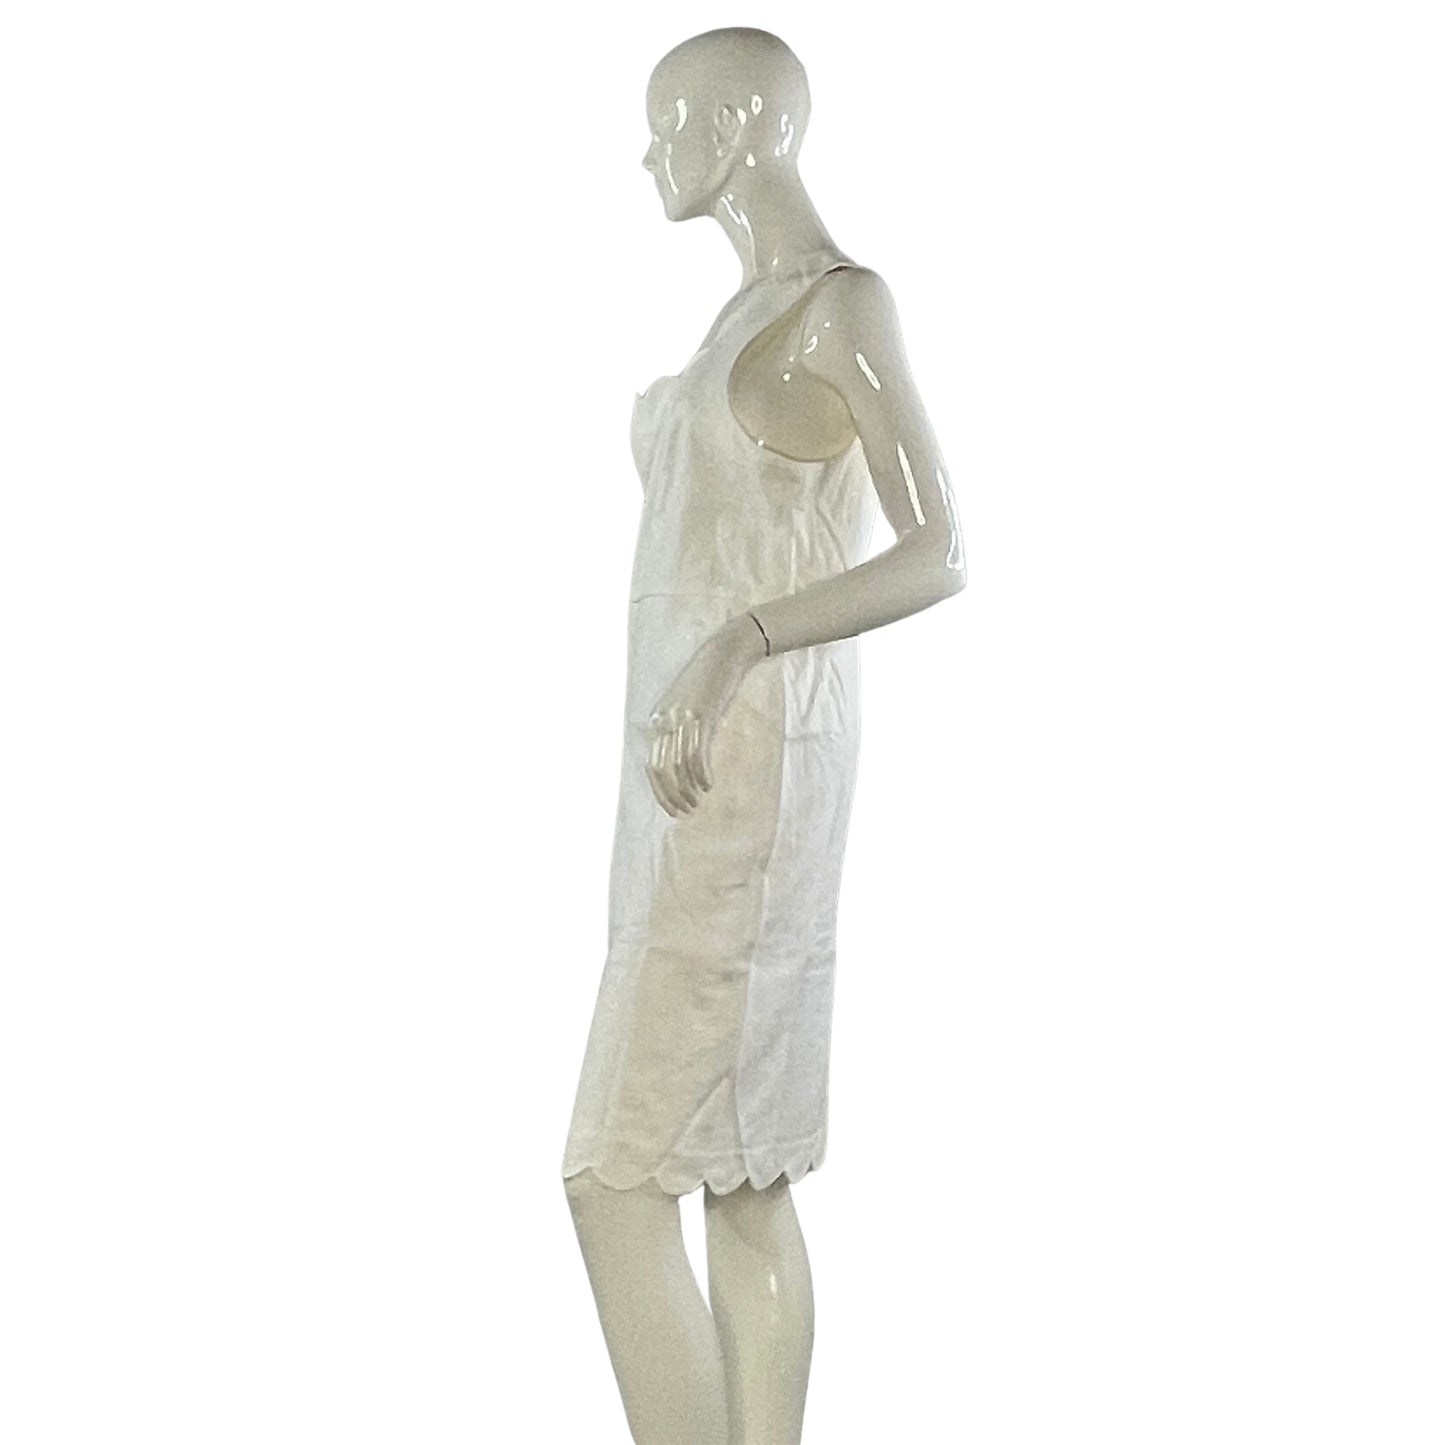 J Crew Dress Sleeveless Above-Knee Scallop Detail White Size 20 SKU 000414